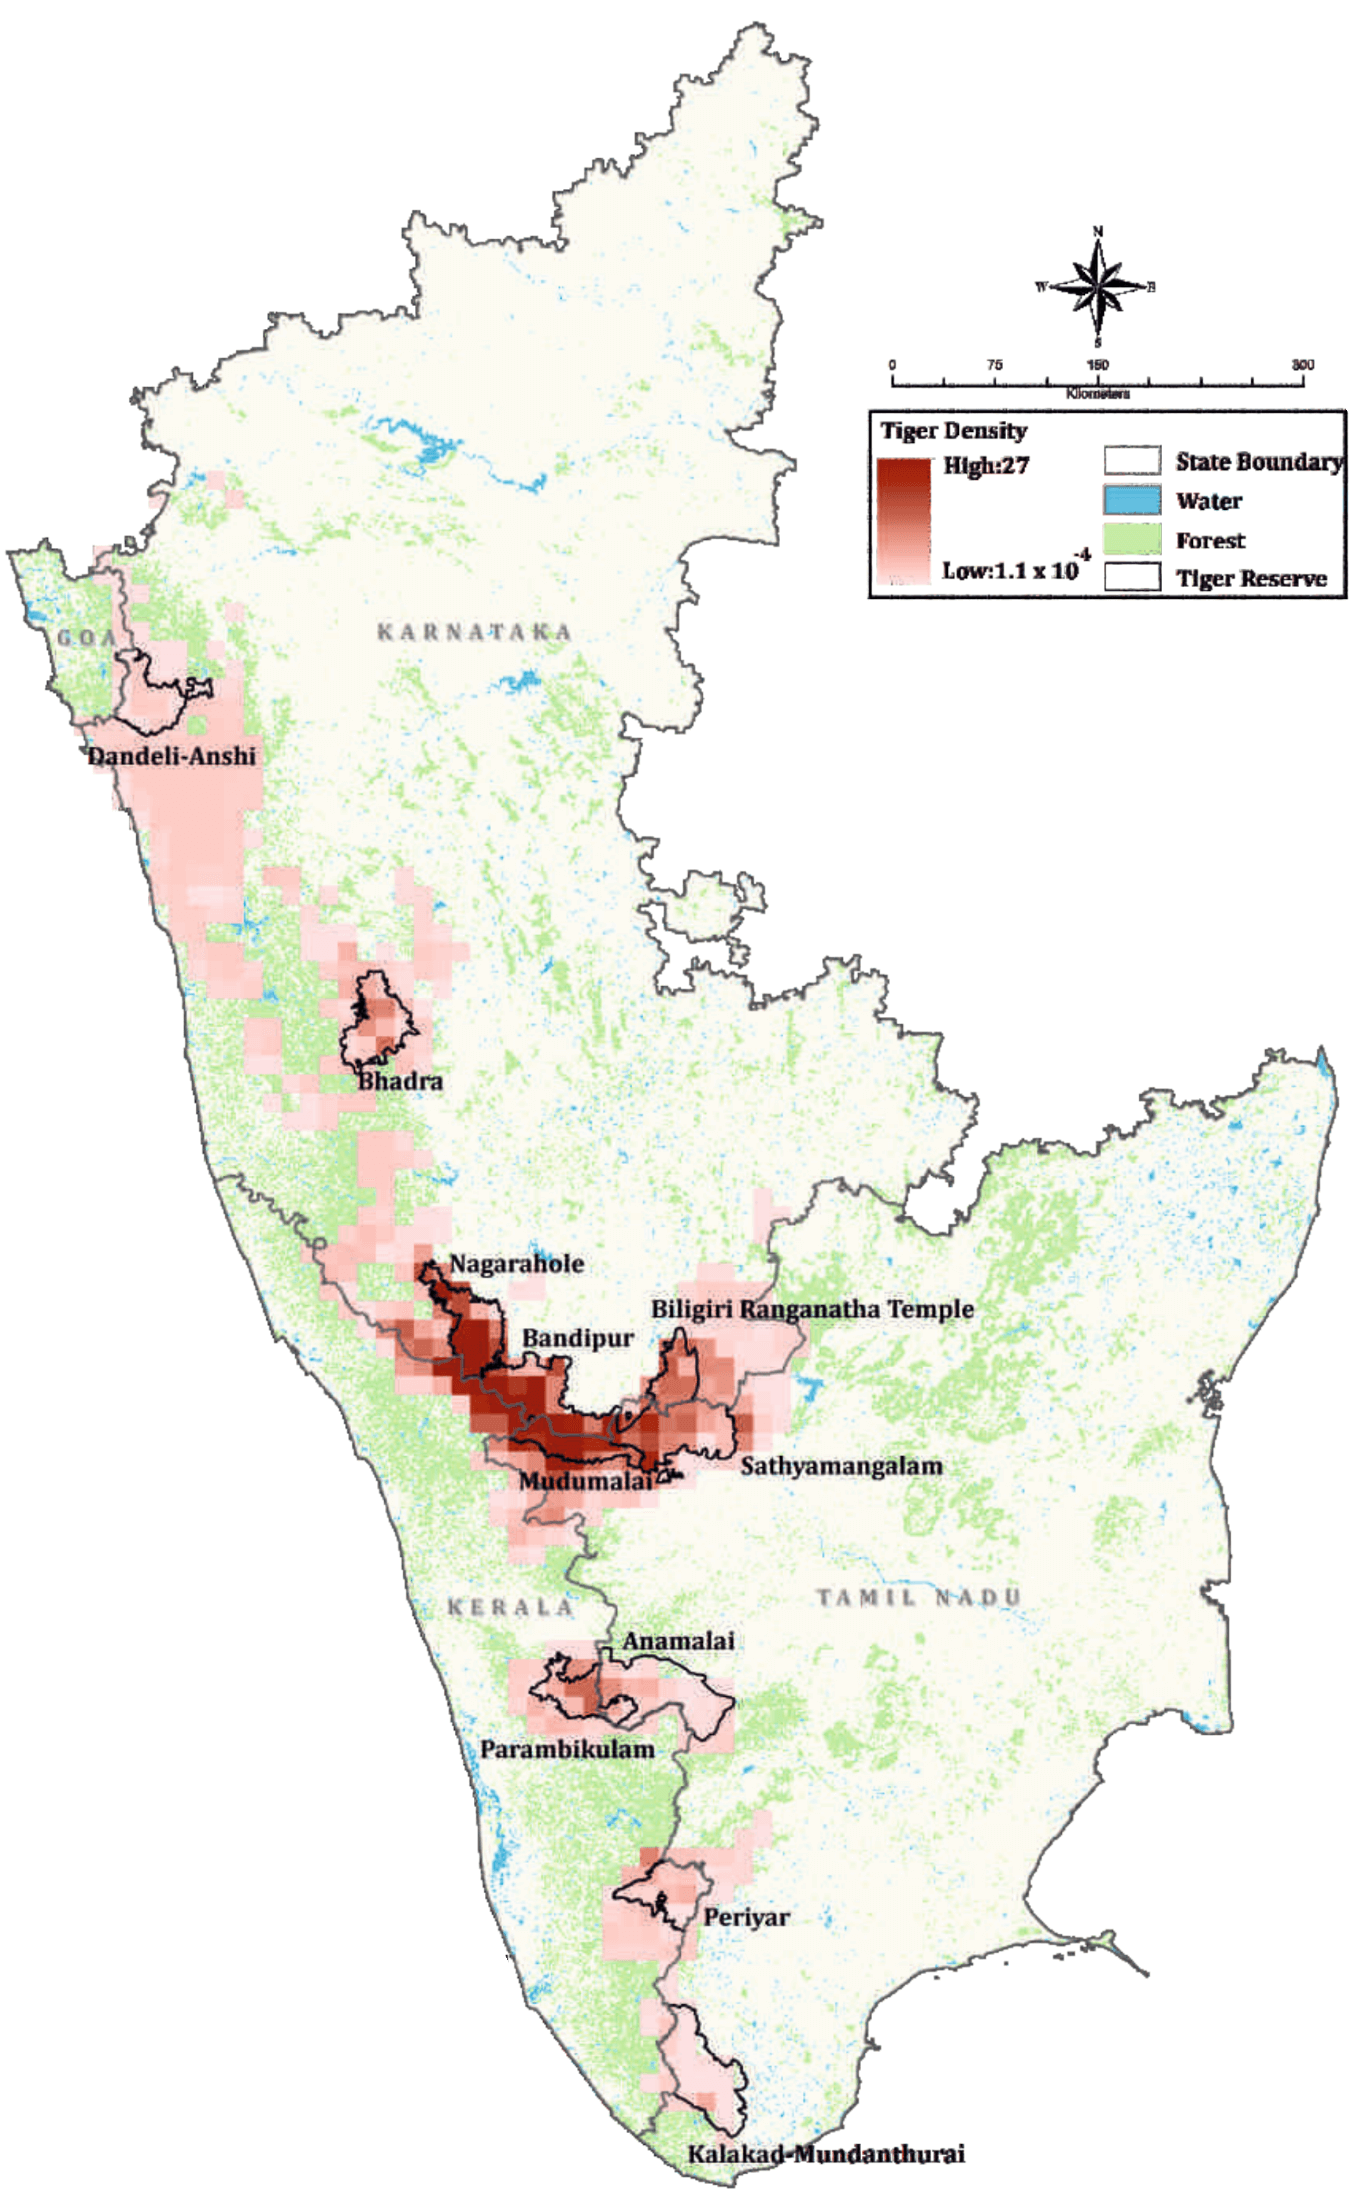 Tiger Reserves in Karnataka, Tamil Nadu & Kerala